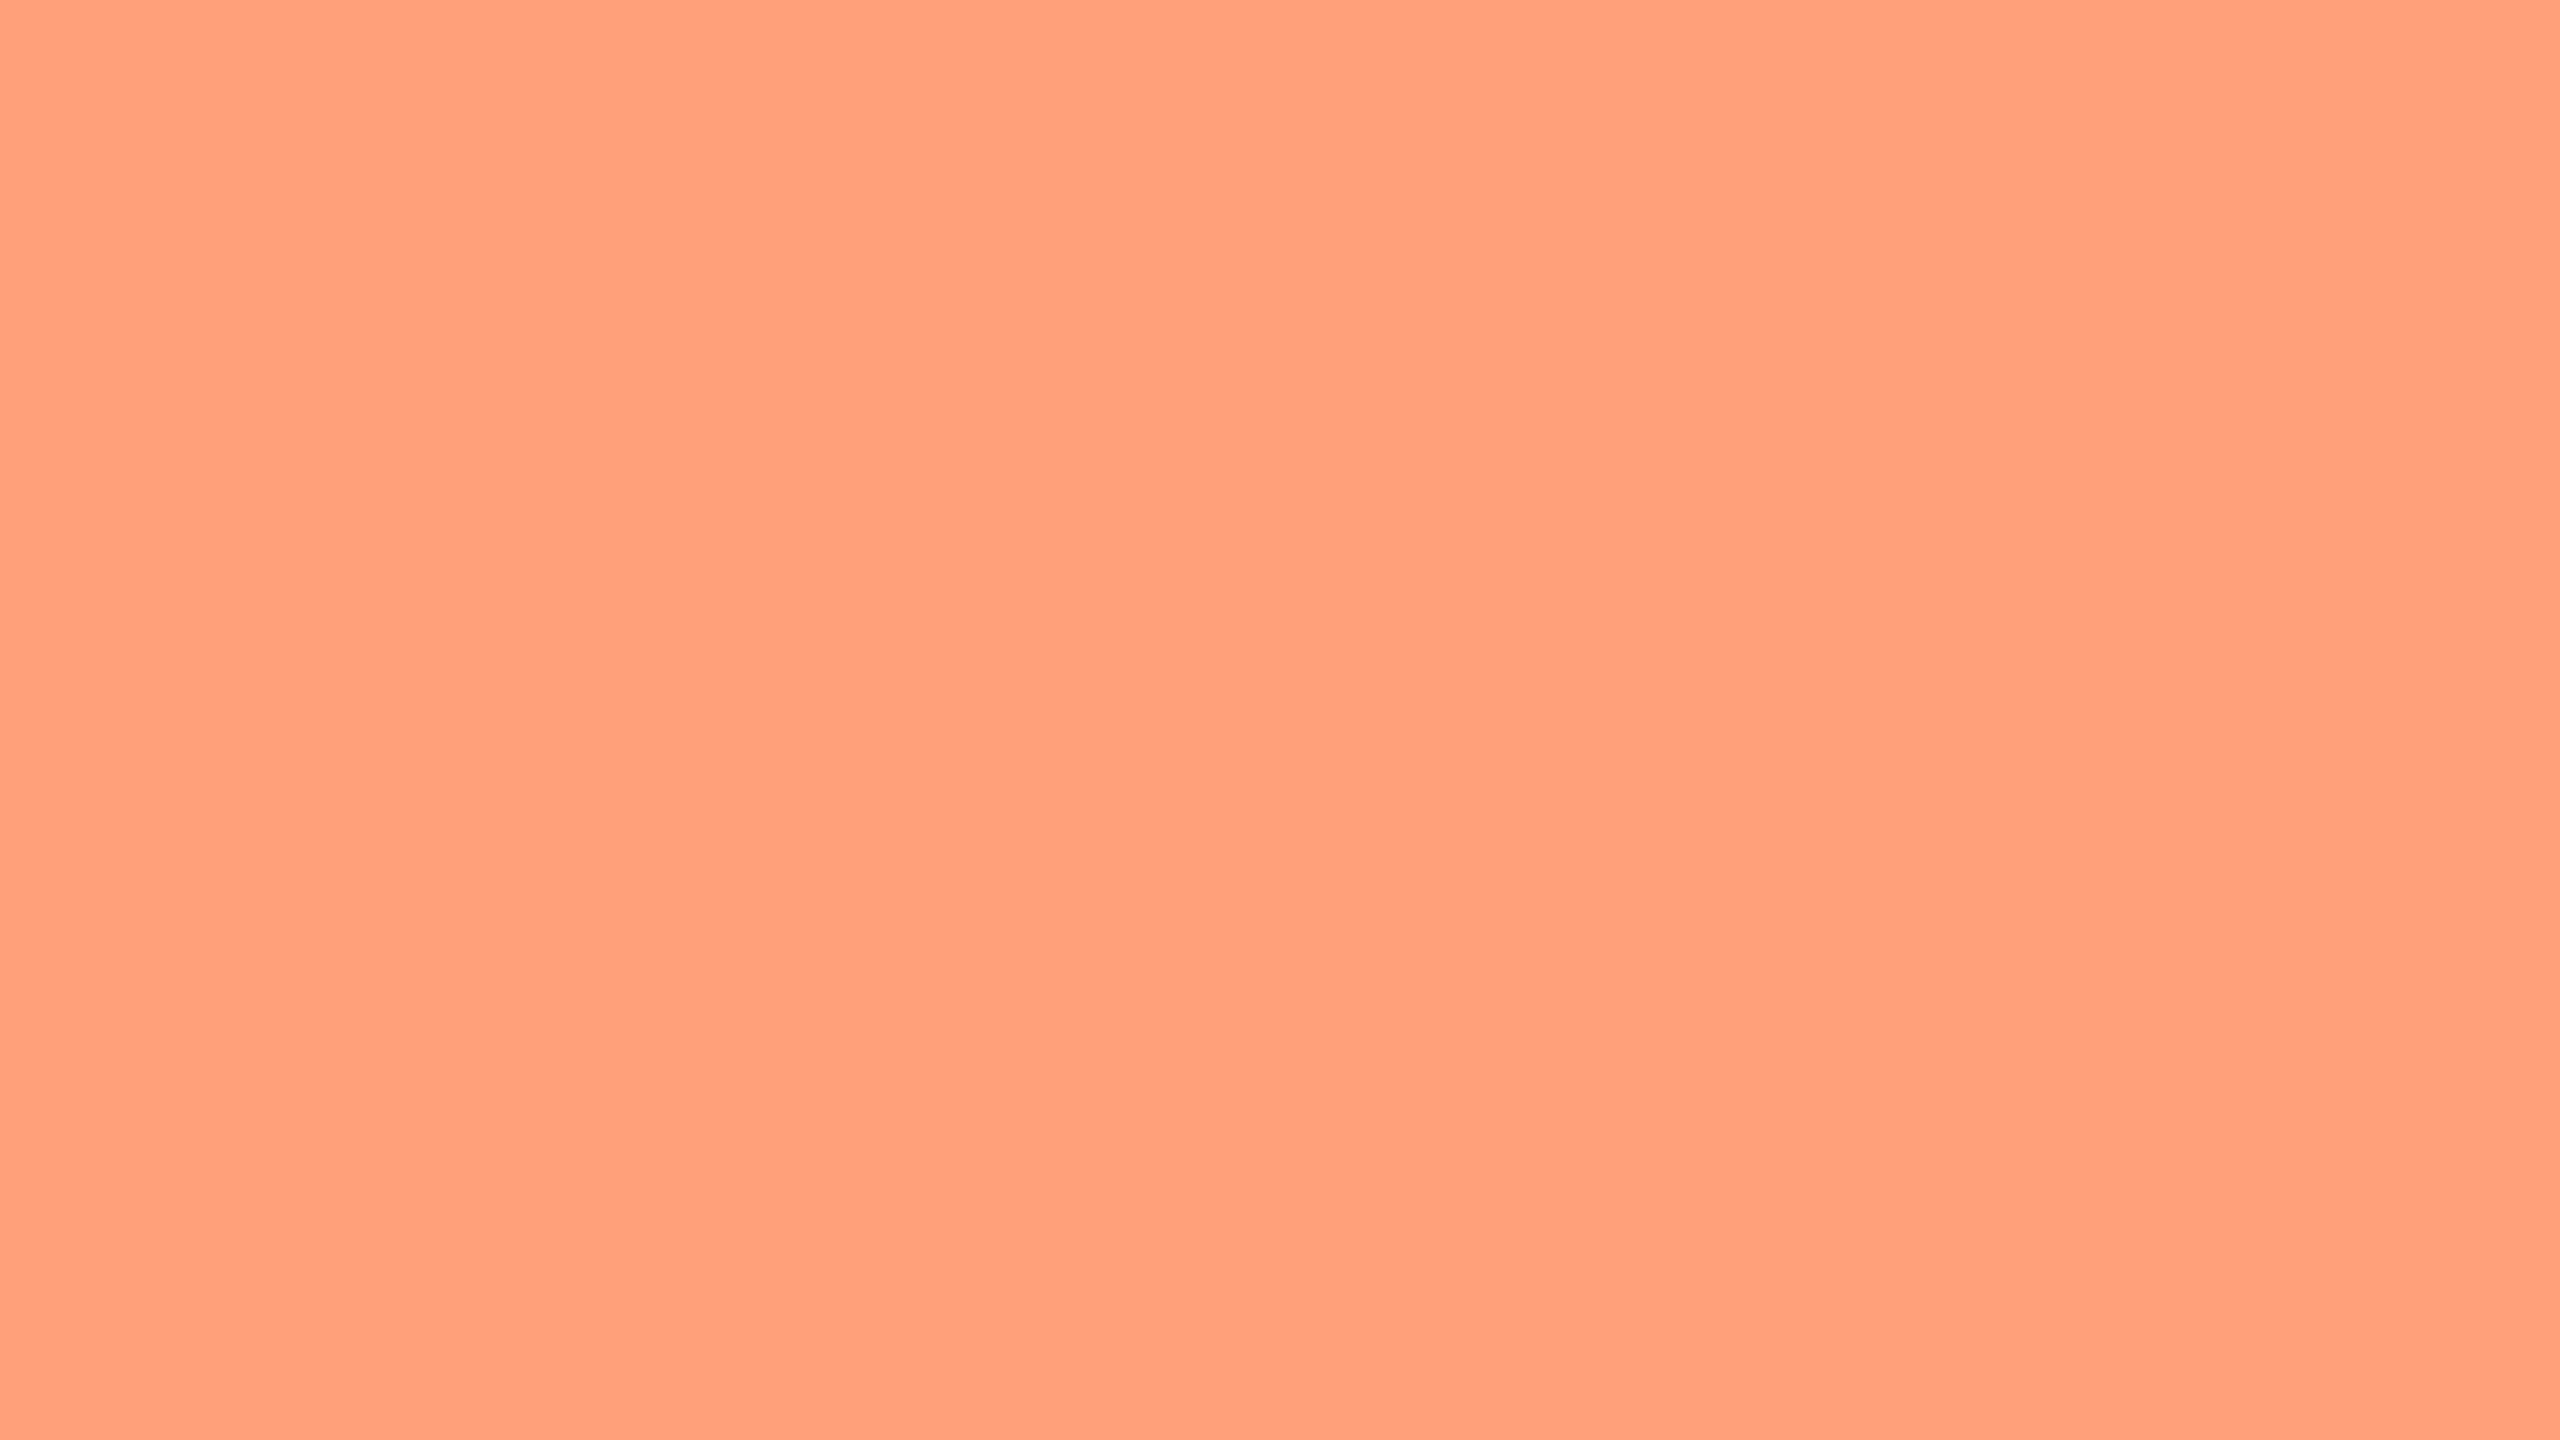 Free download background color solid salmon light image 2560x1440 [2560x1440] for your Desktop, Mobile & Tablet. Explore Salmon Wallpaper. King Salmon Wallpaper, Chinook Salmon Wallpaper, Salmon Fishing Wallpaper - Salmon color